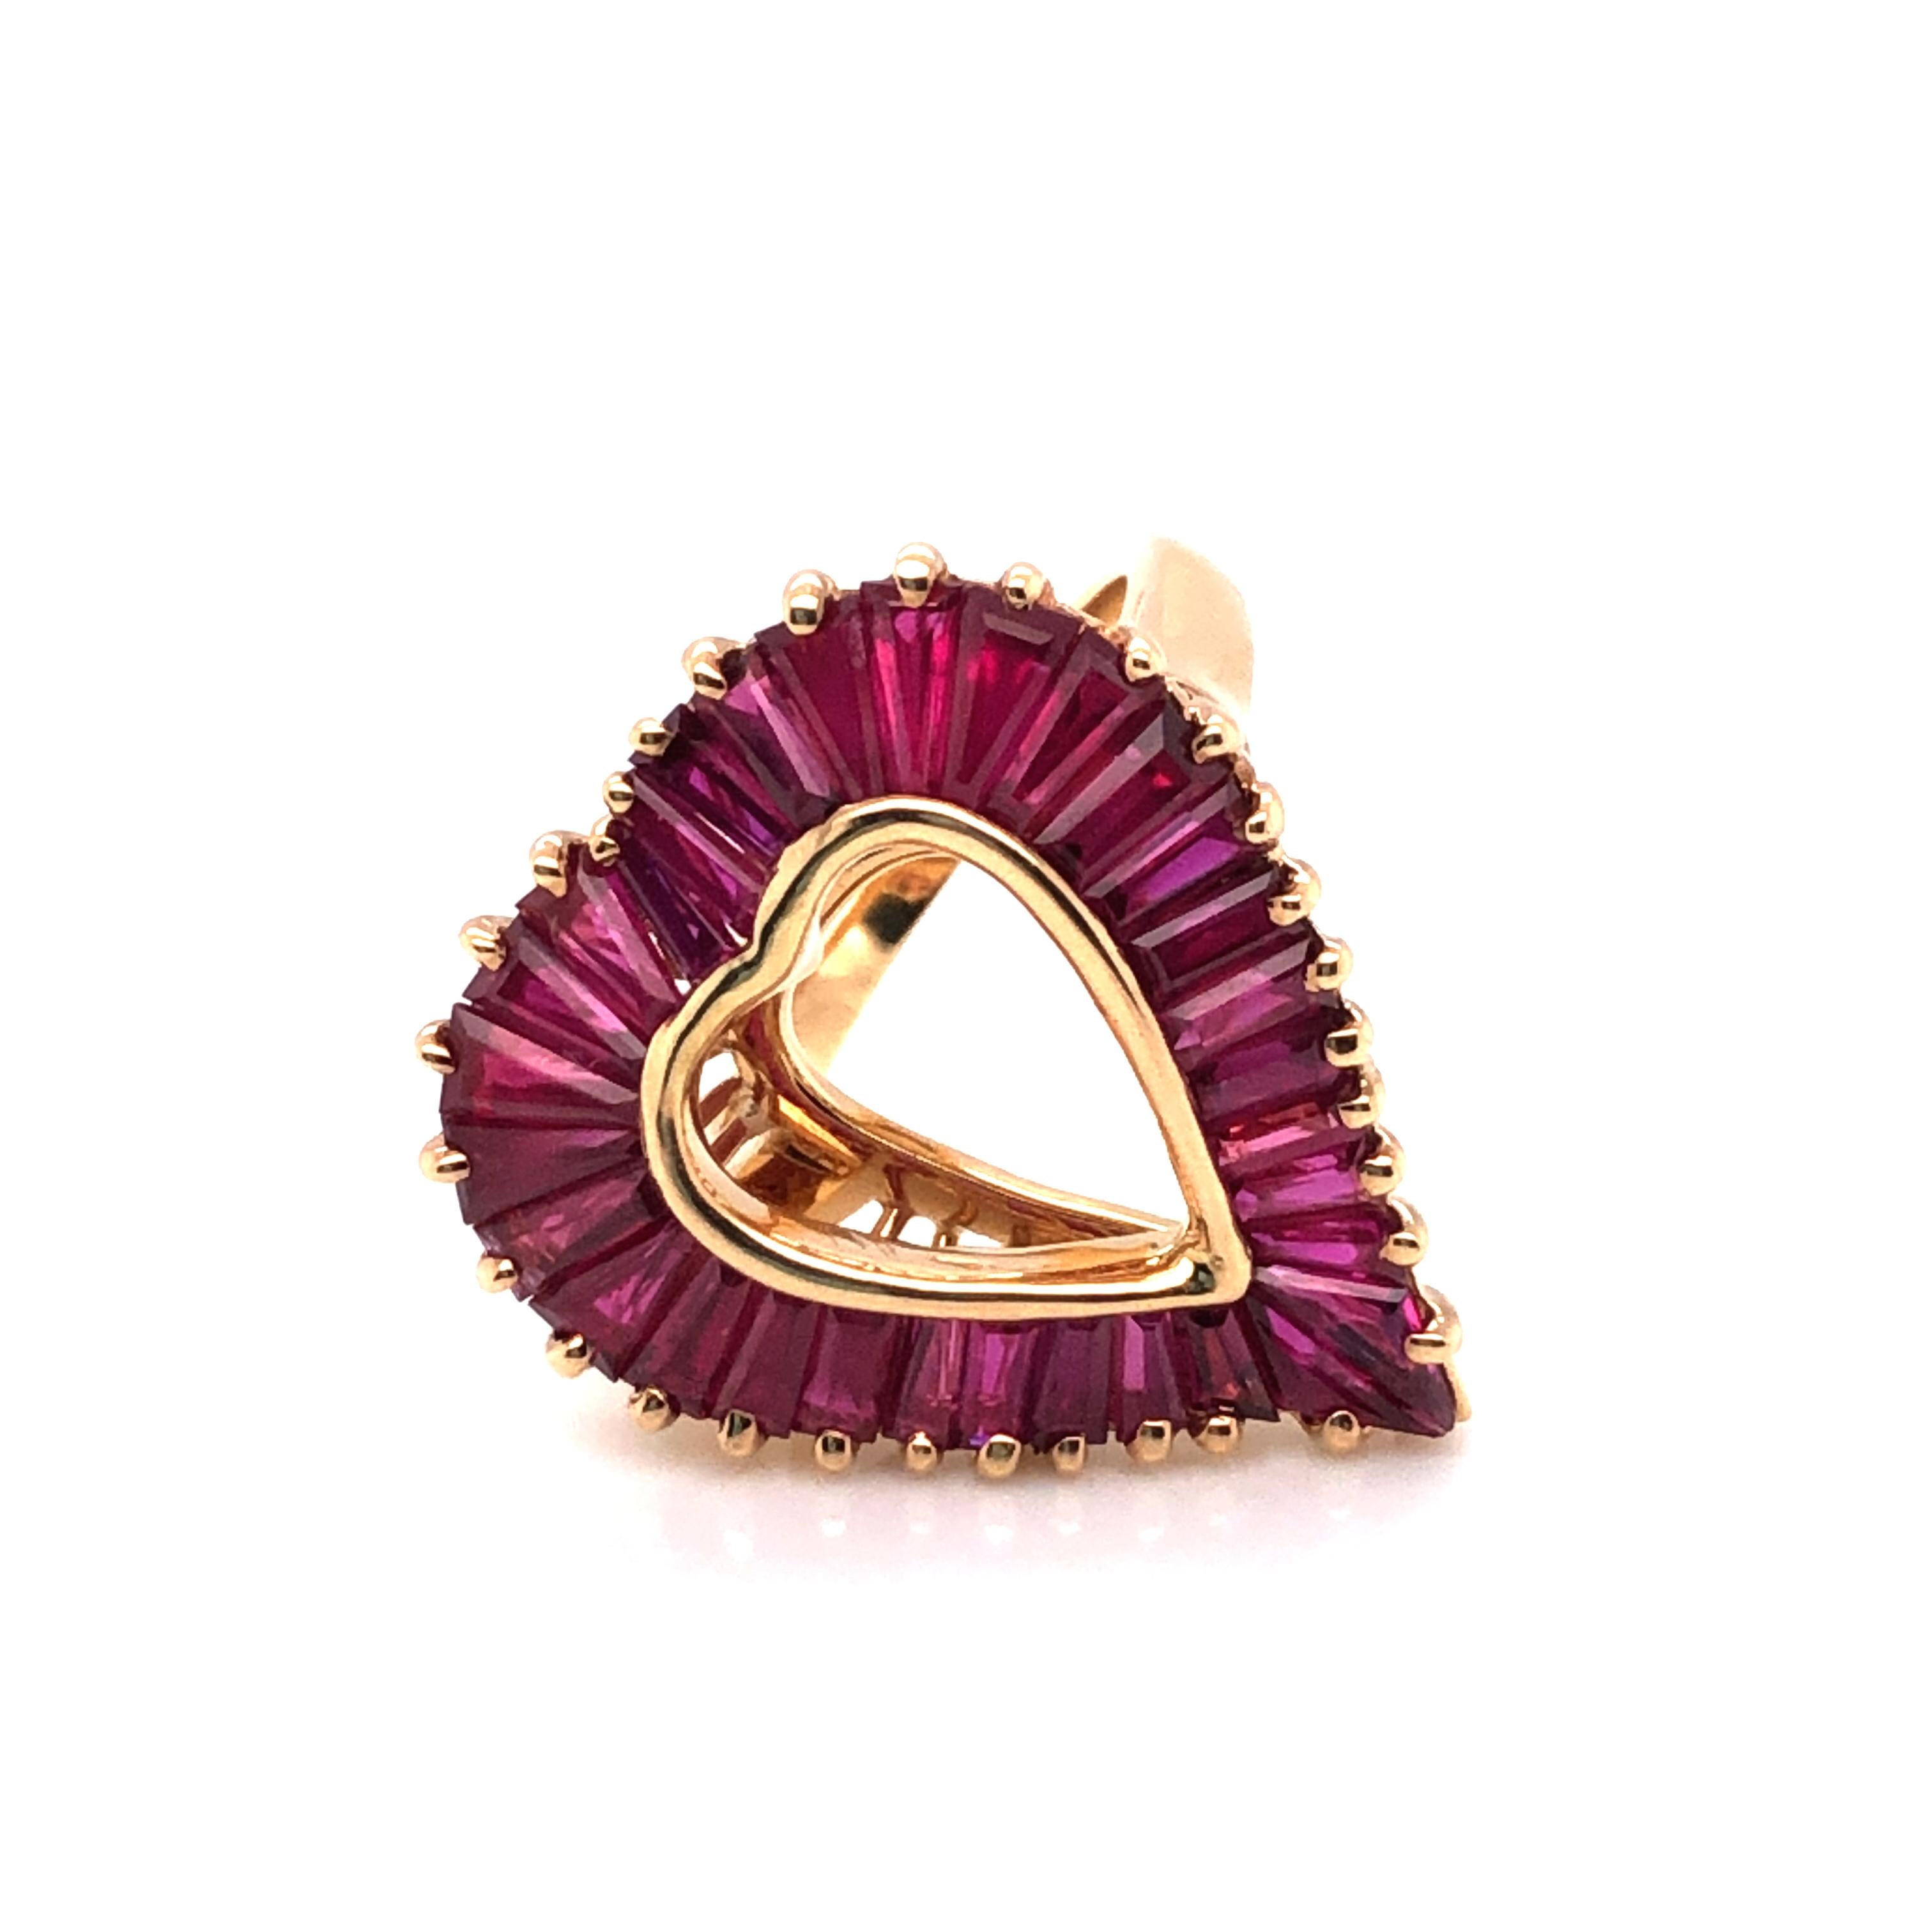 Modern Oscar Heyman 18 Karat Gold Ruby Heart Shaped 'Ballerina' Style Ring